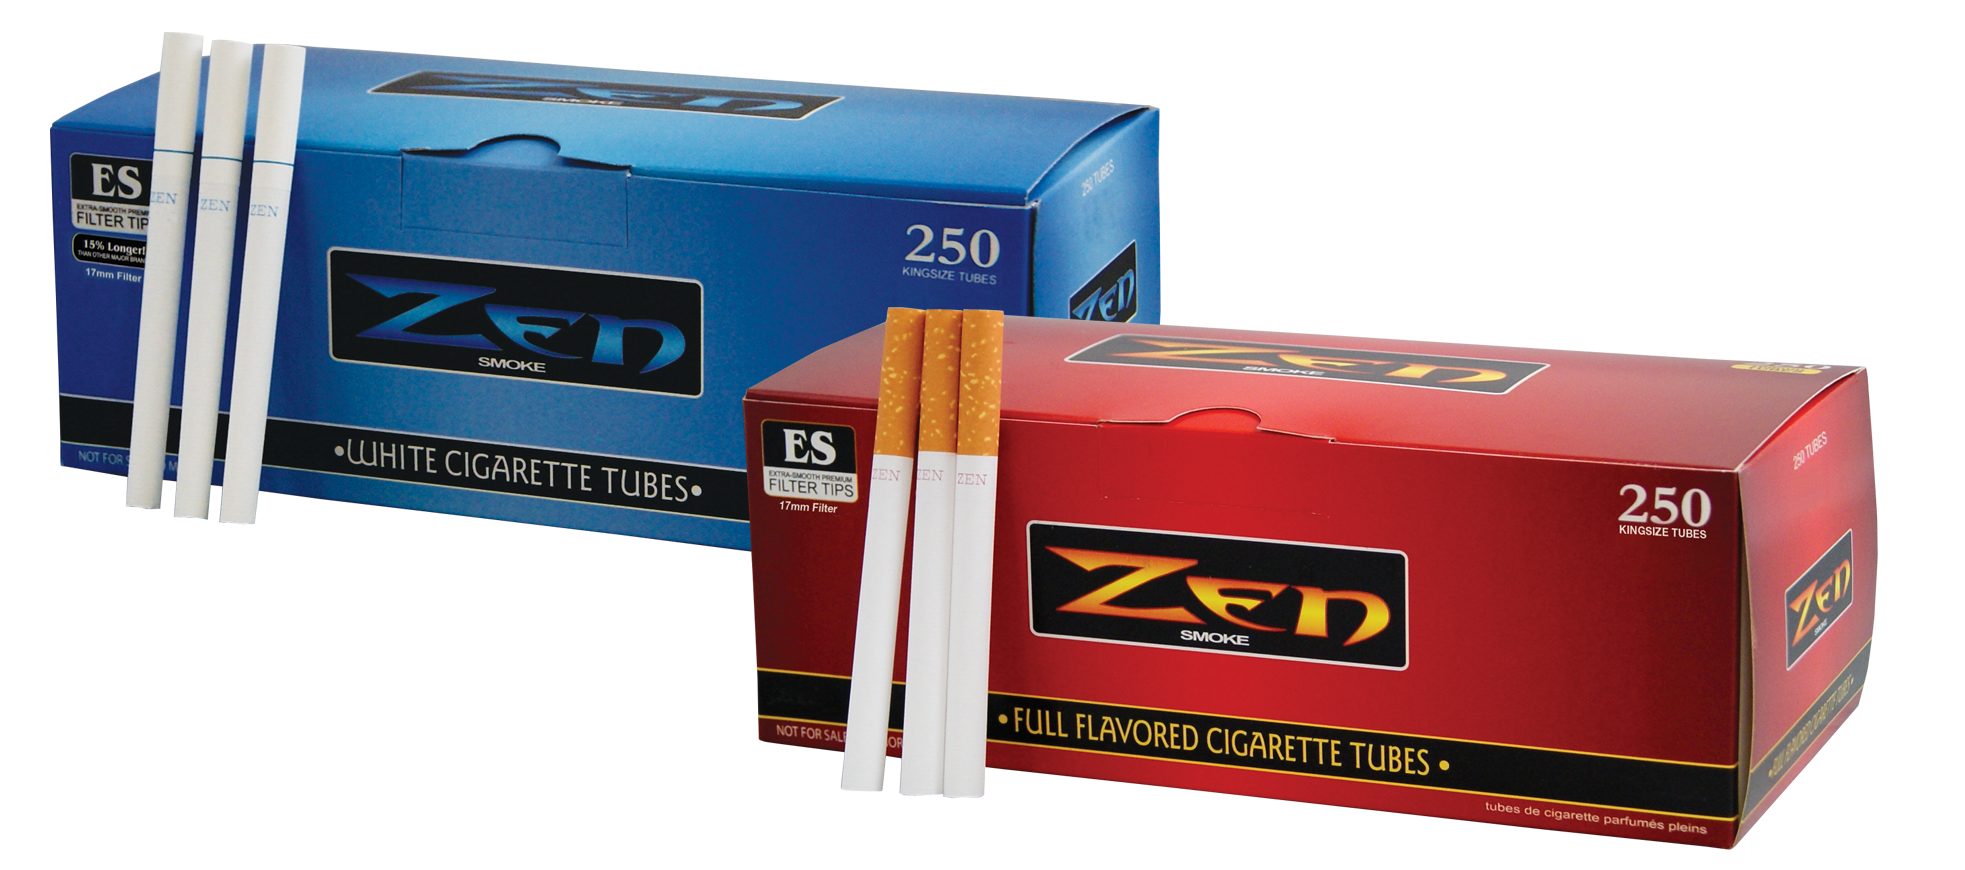 Zen CIgarette Tubes